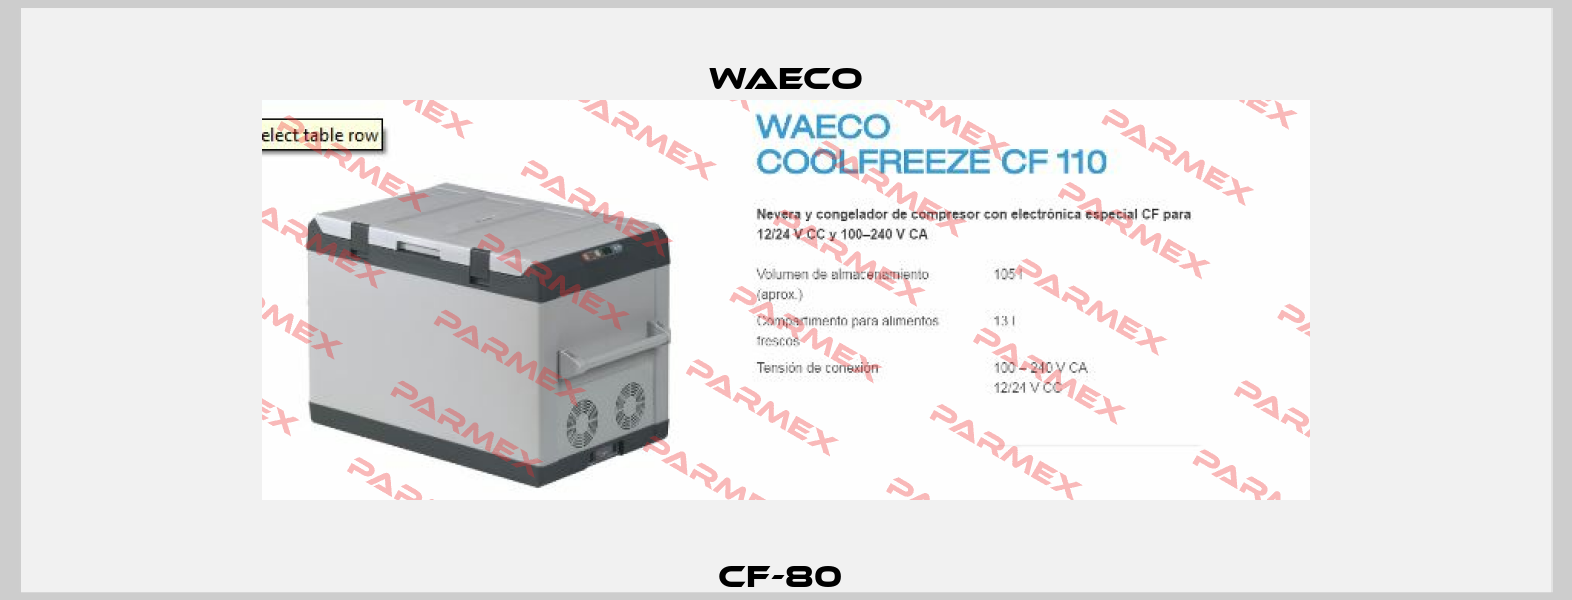 CF-80  Waeco